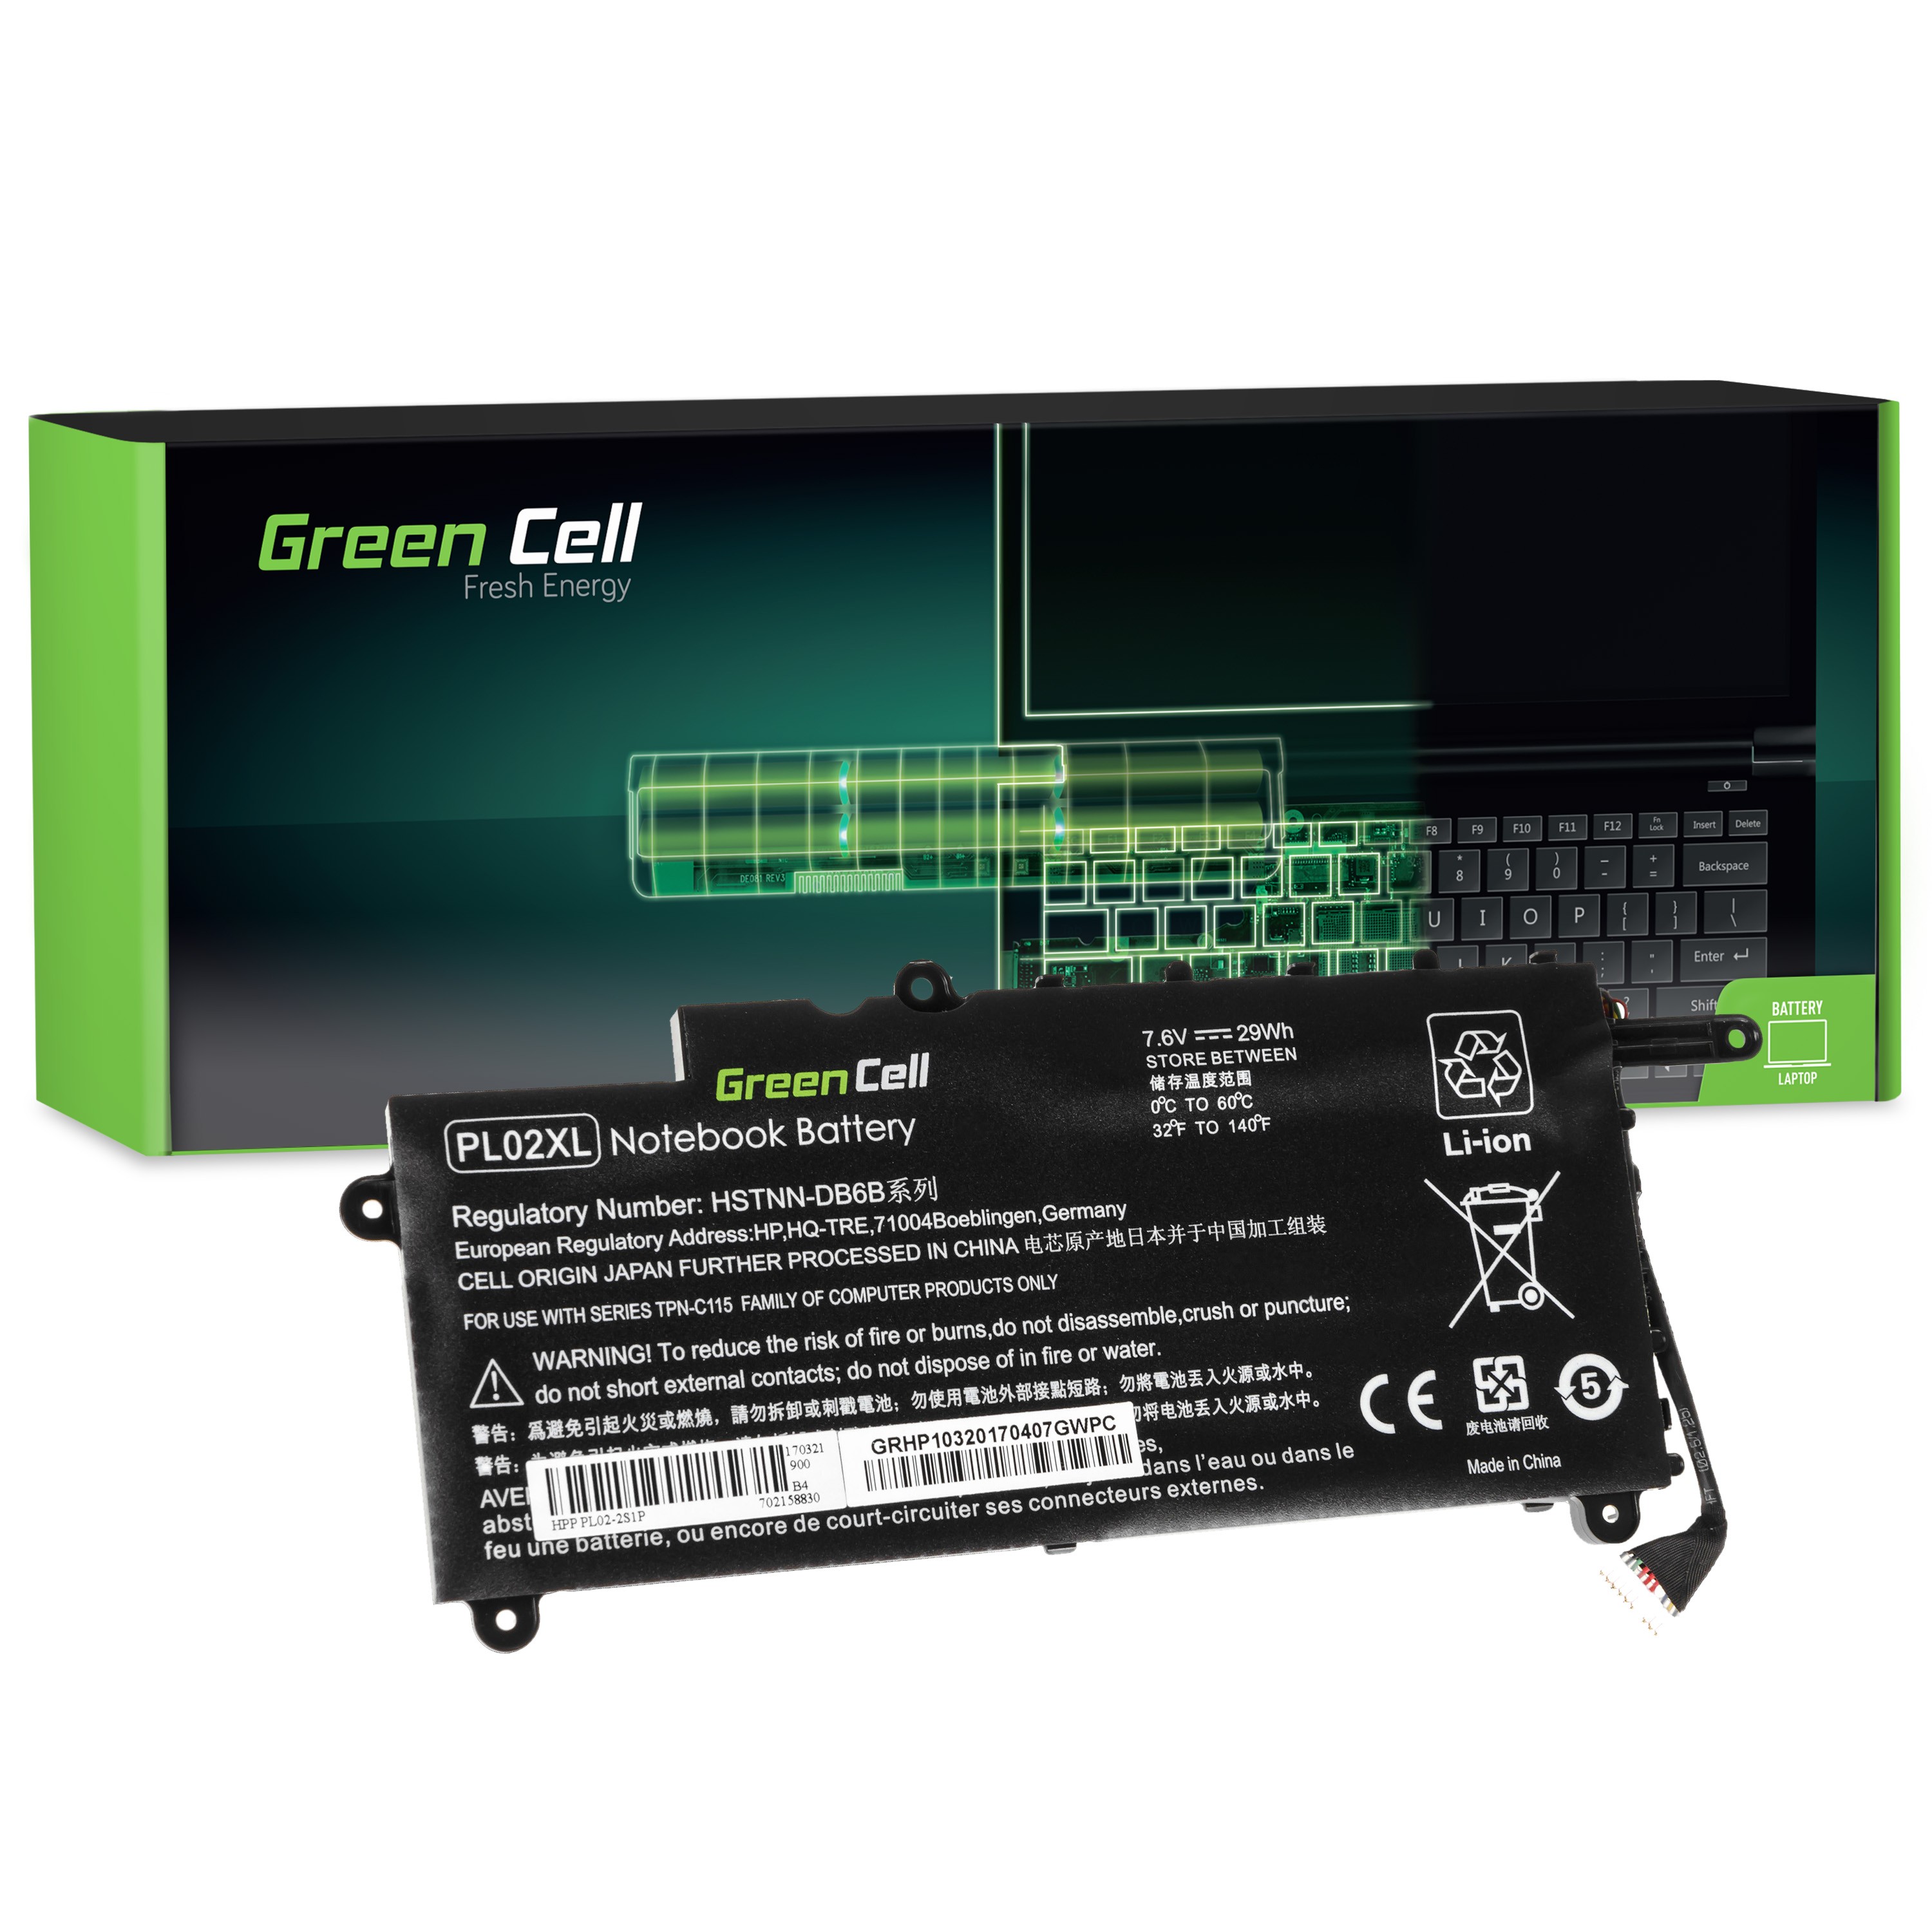 Green Cell Battery for HP Pavilion x360 11-N HP x360 310 G1 / 7,6V 3800mAh